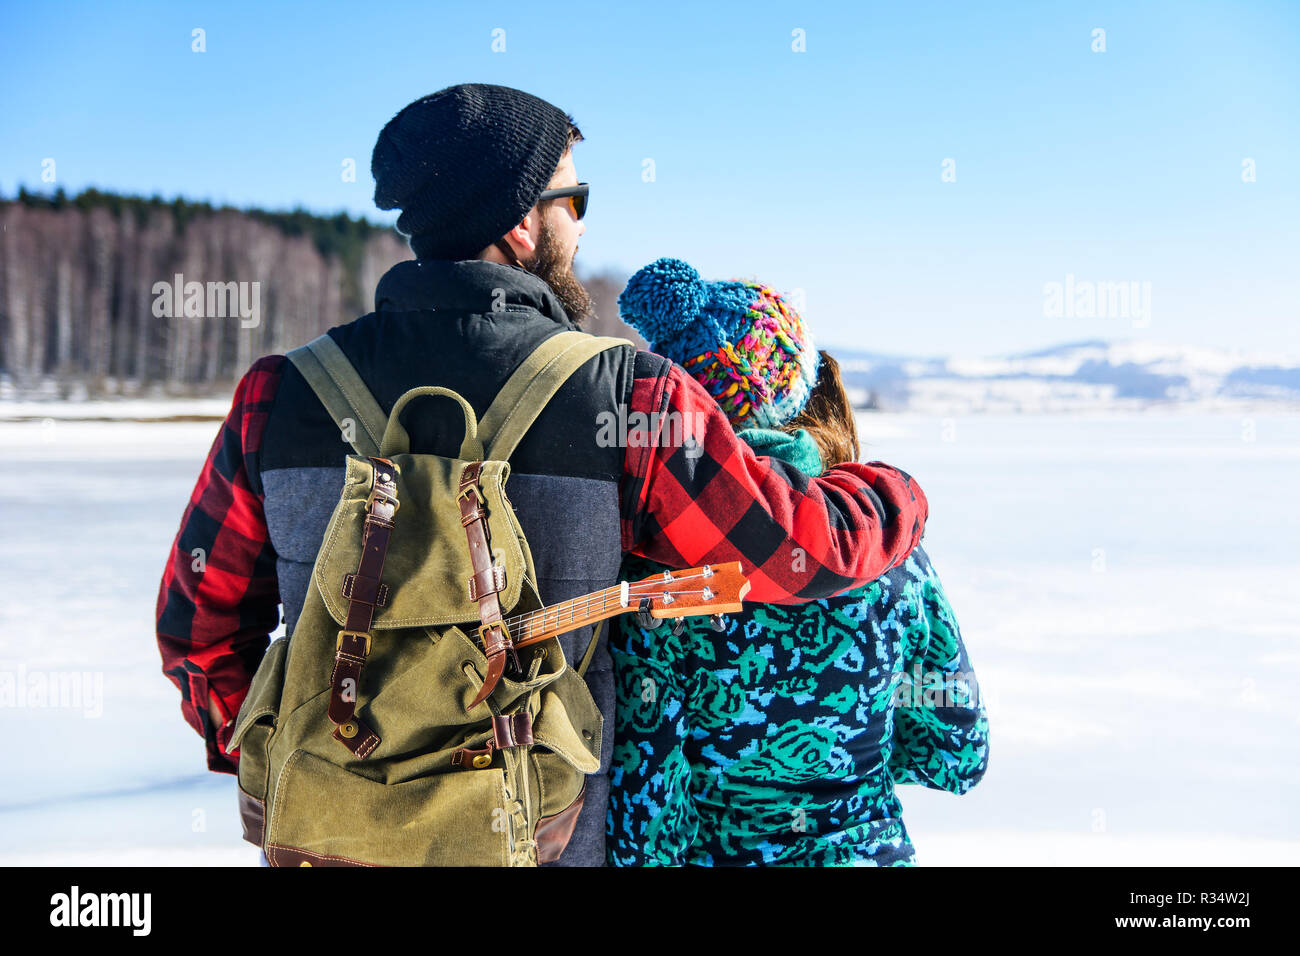 Couple enjoying the day on a frozen lake surface Stock Photo